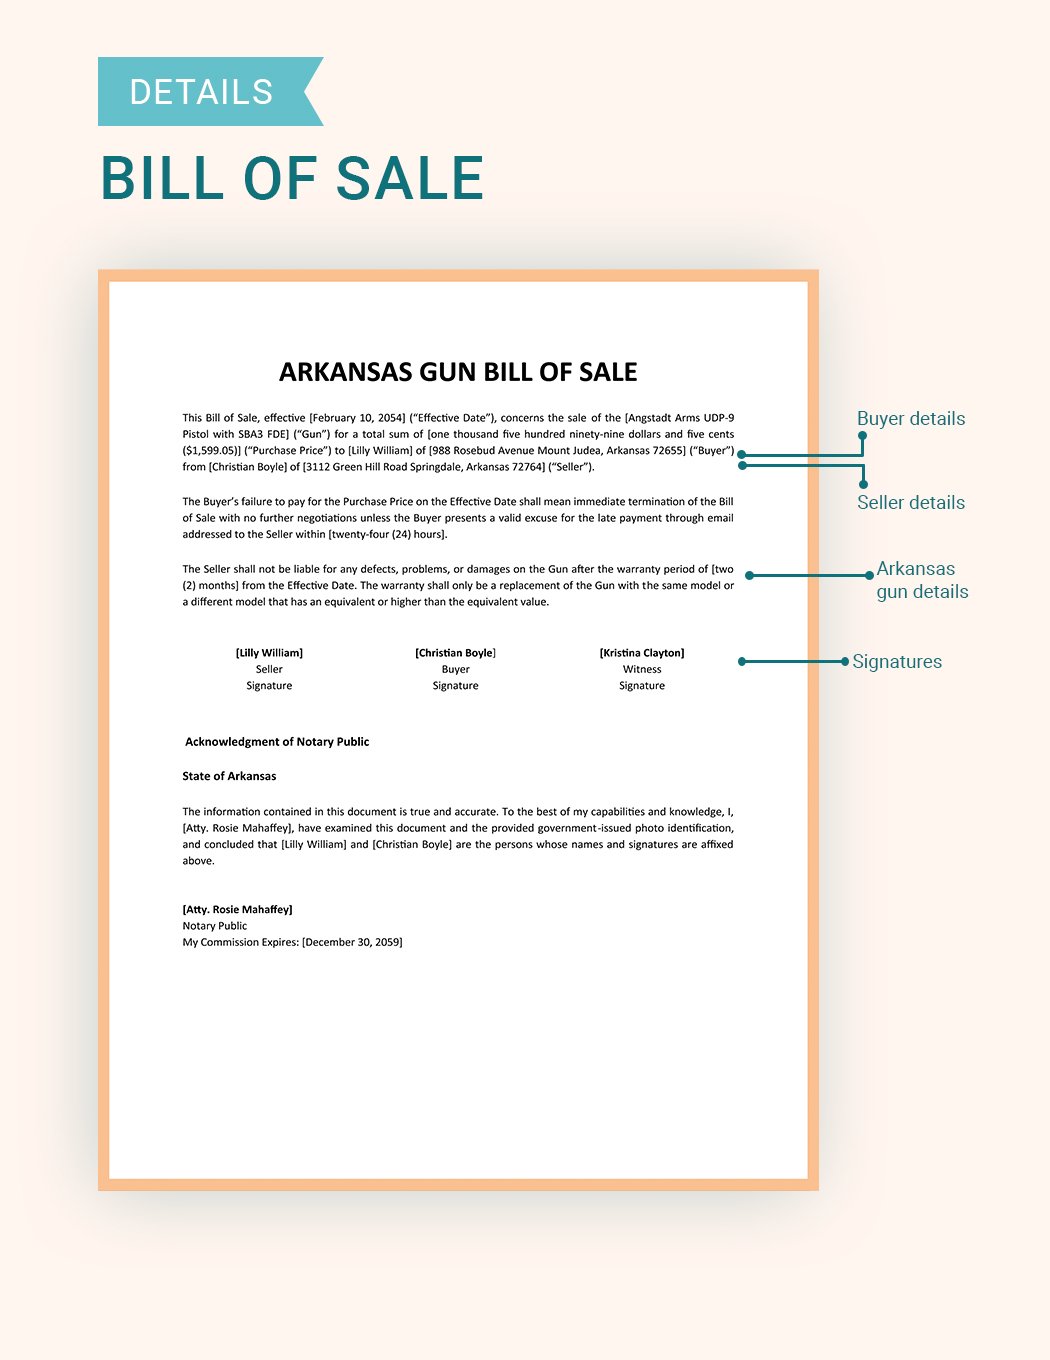 Arkansas Firearm / Gun Bill Of Sale Form Template